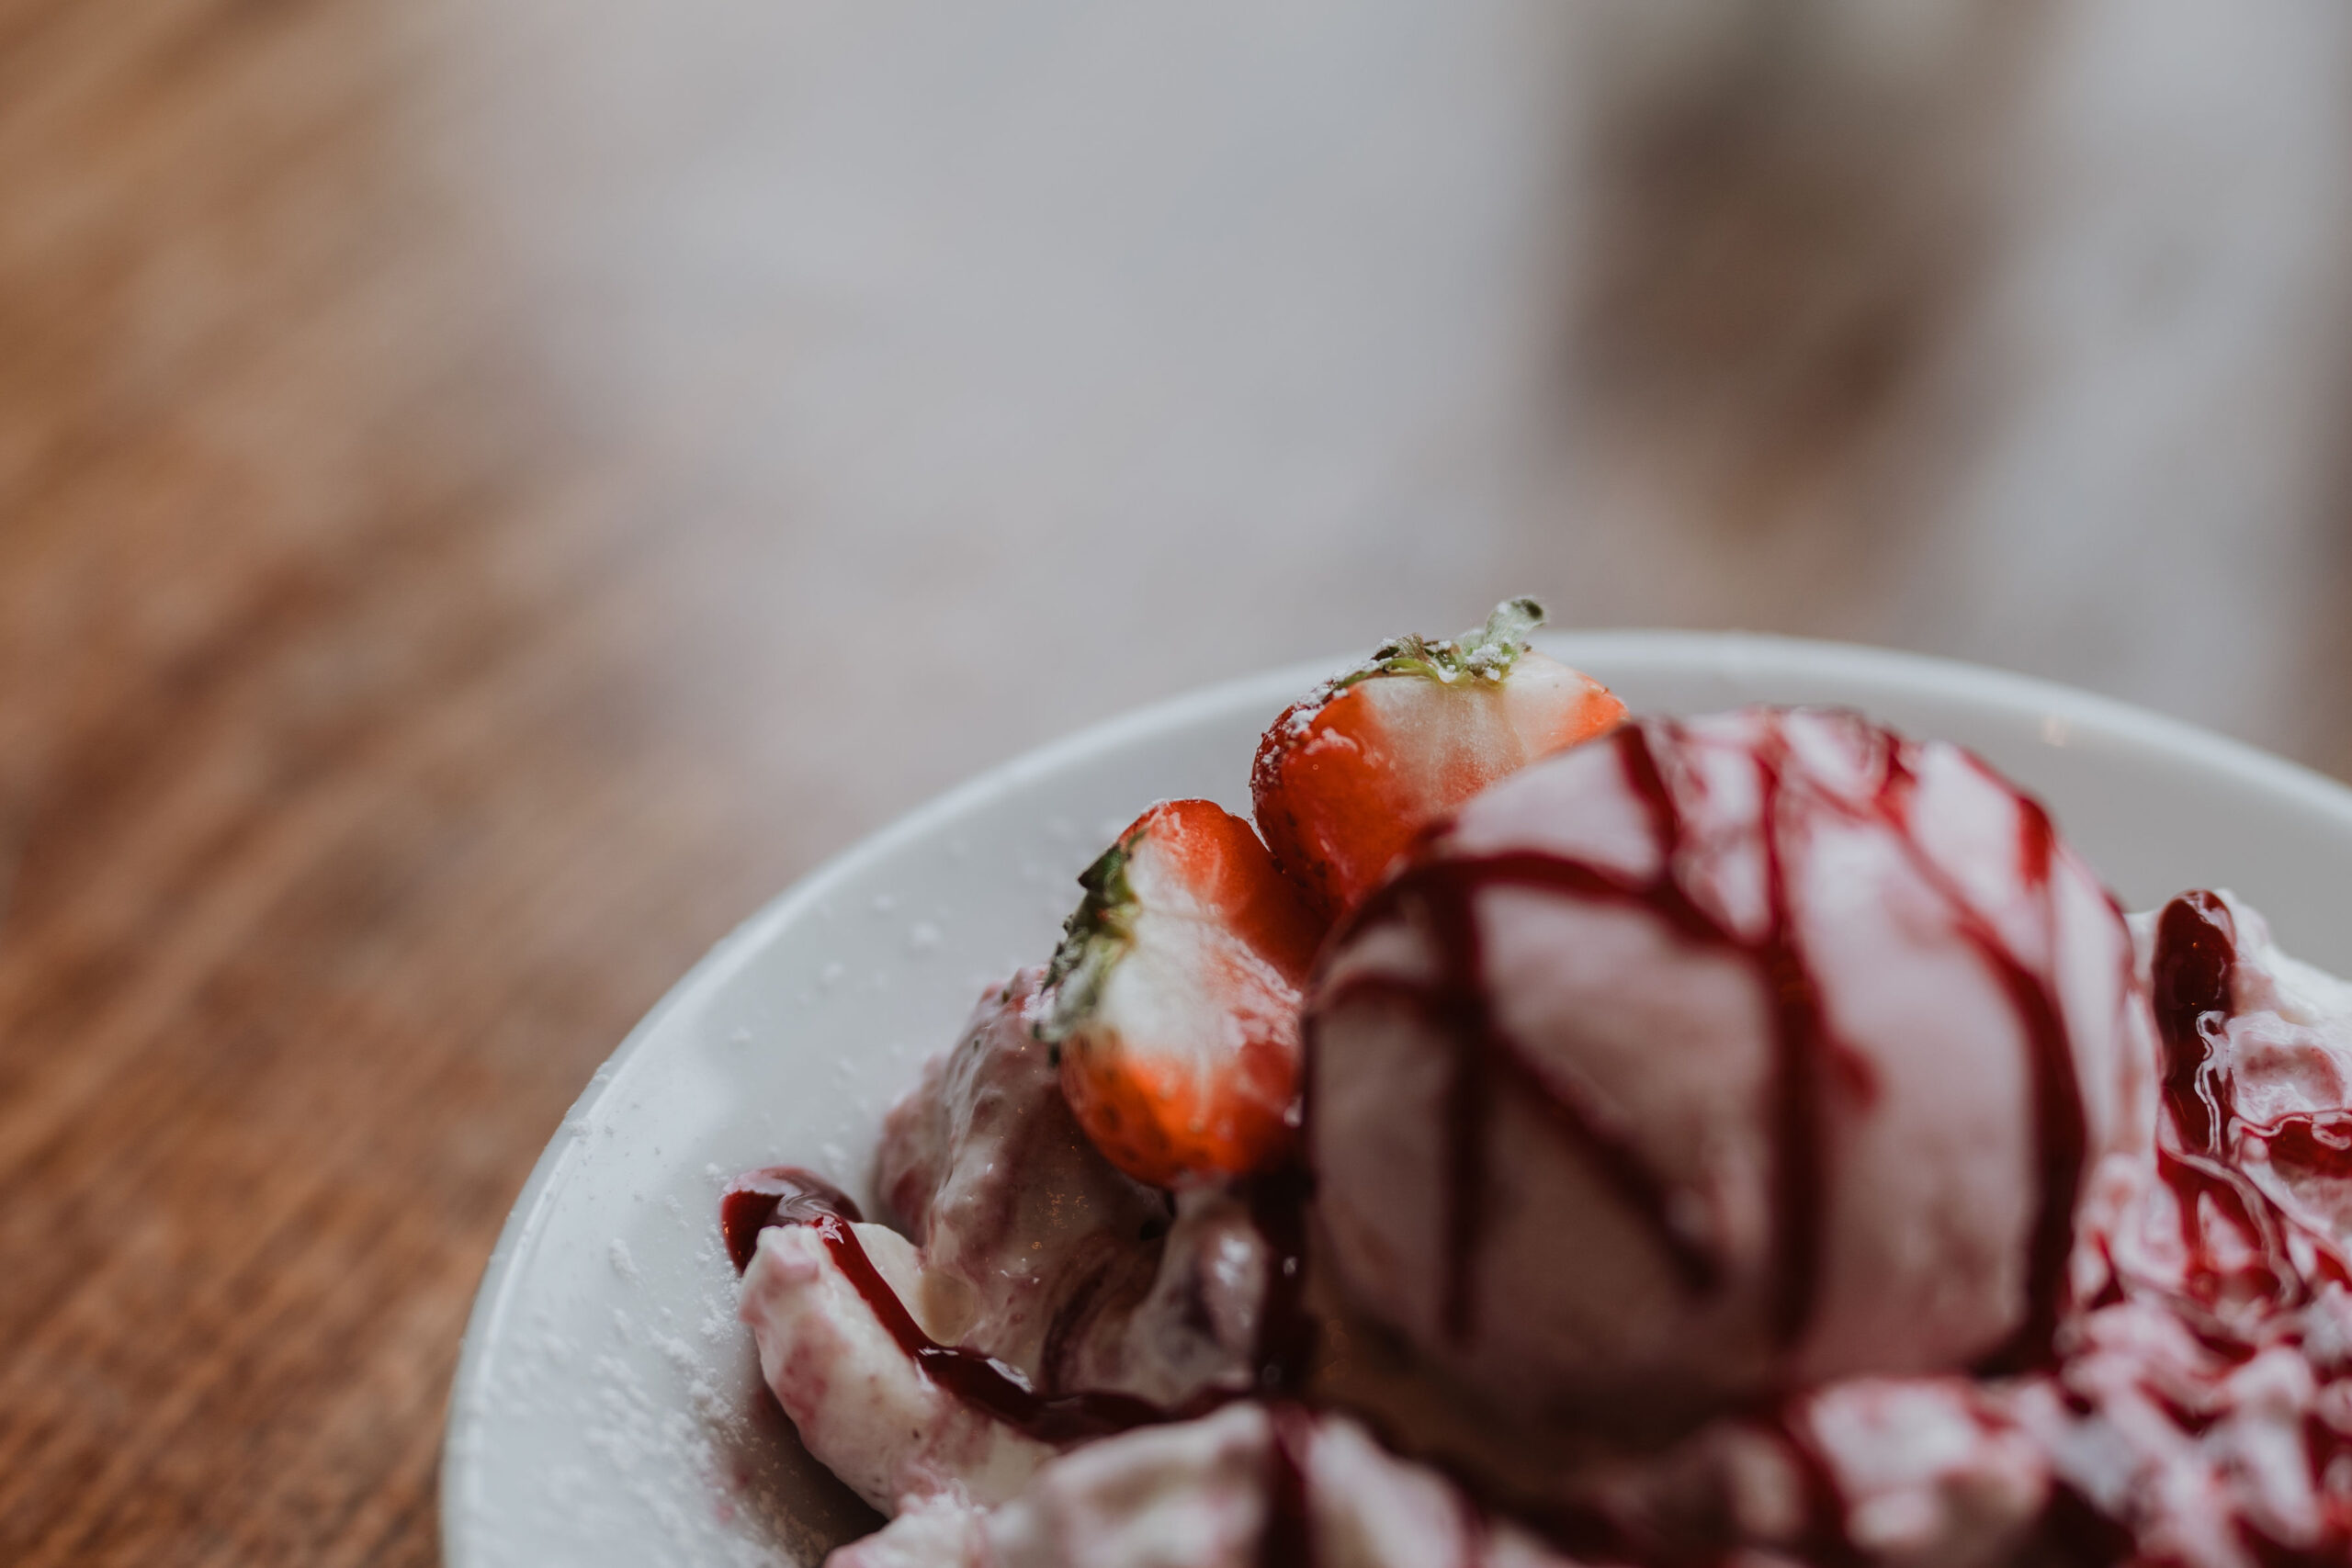 Eton mess with strawberry ice cream, sauce and fresh strawberries